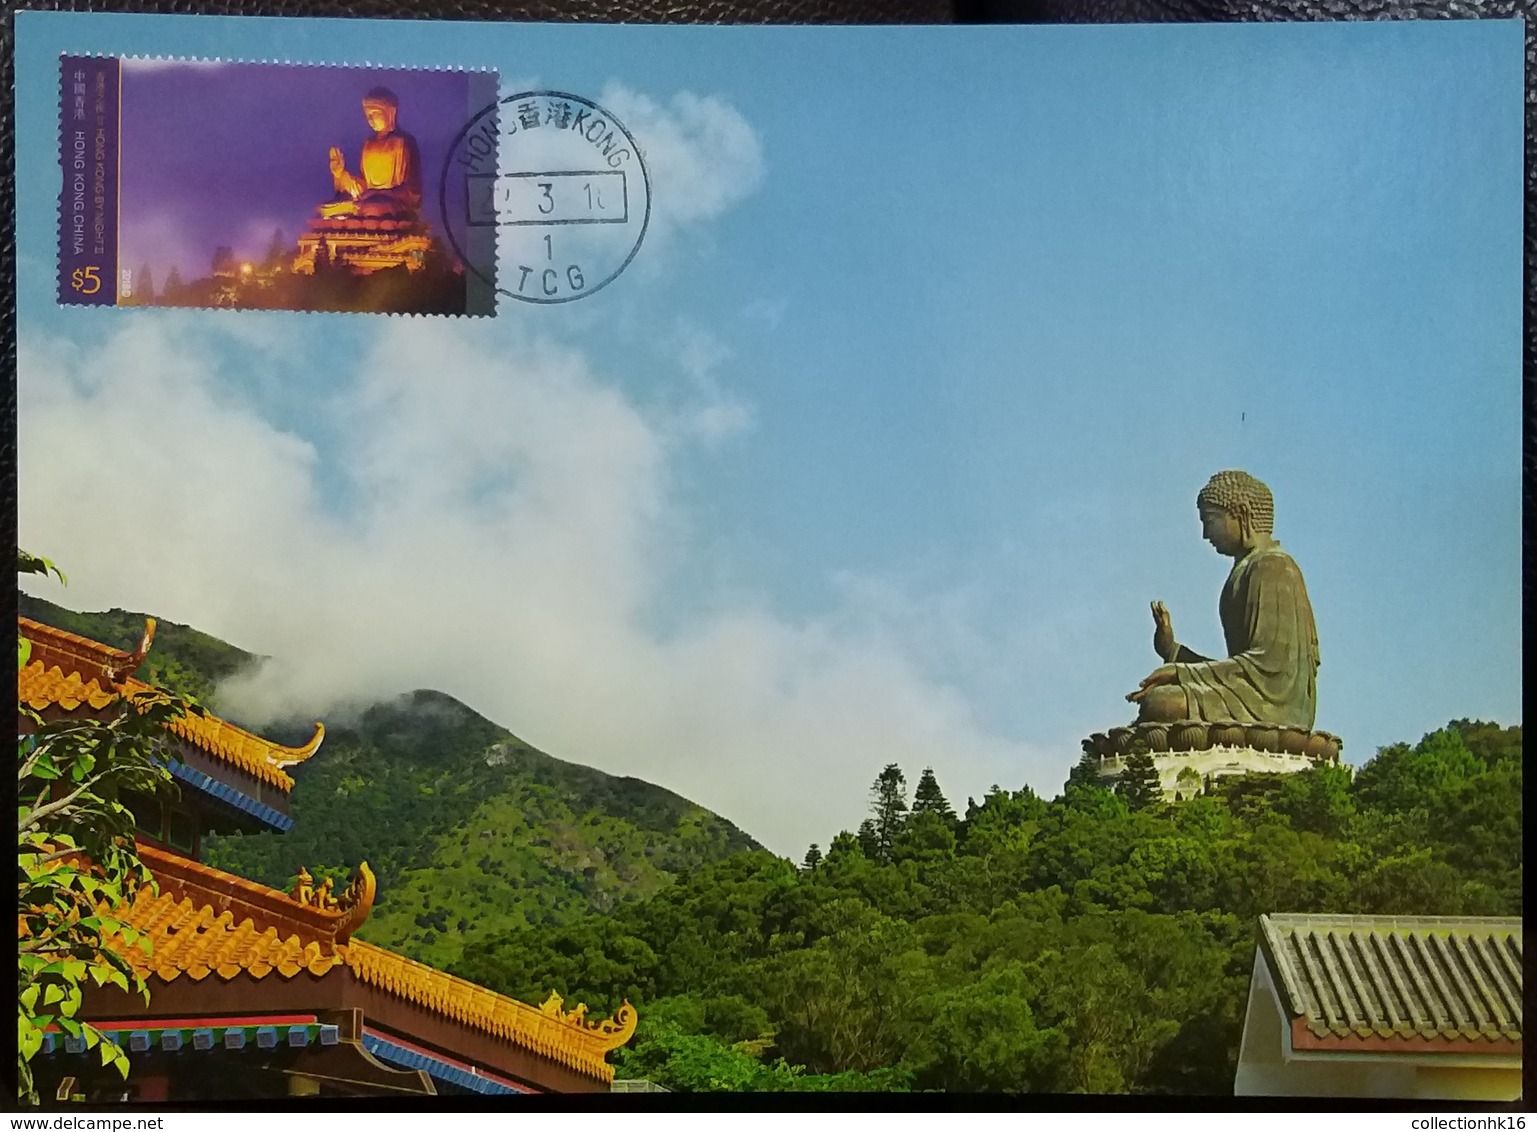 Hong Kong By Night II 2018 Hong Kong Maximum Card MC Big Buddha Lantau Island Night View Scenery (Location Postmark) G - Maximumkaarten